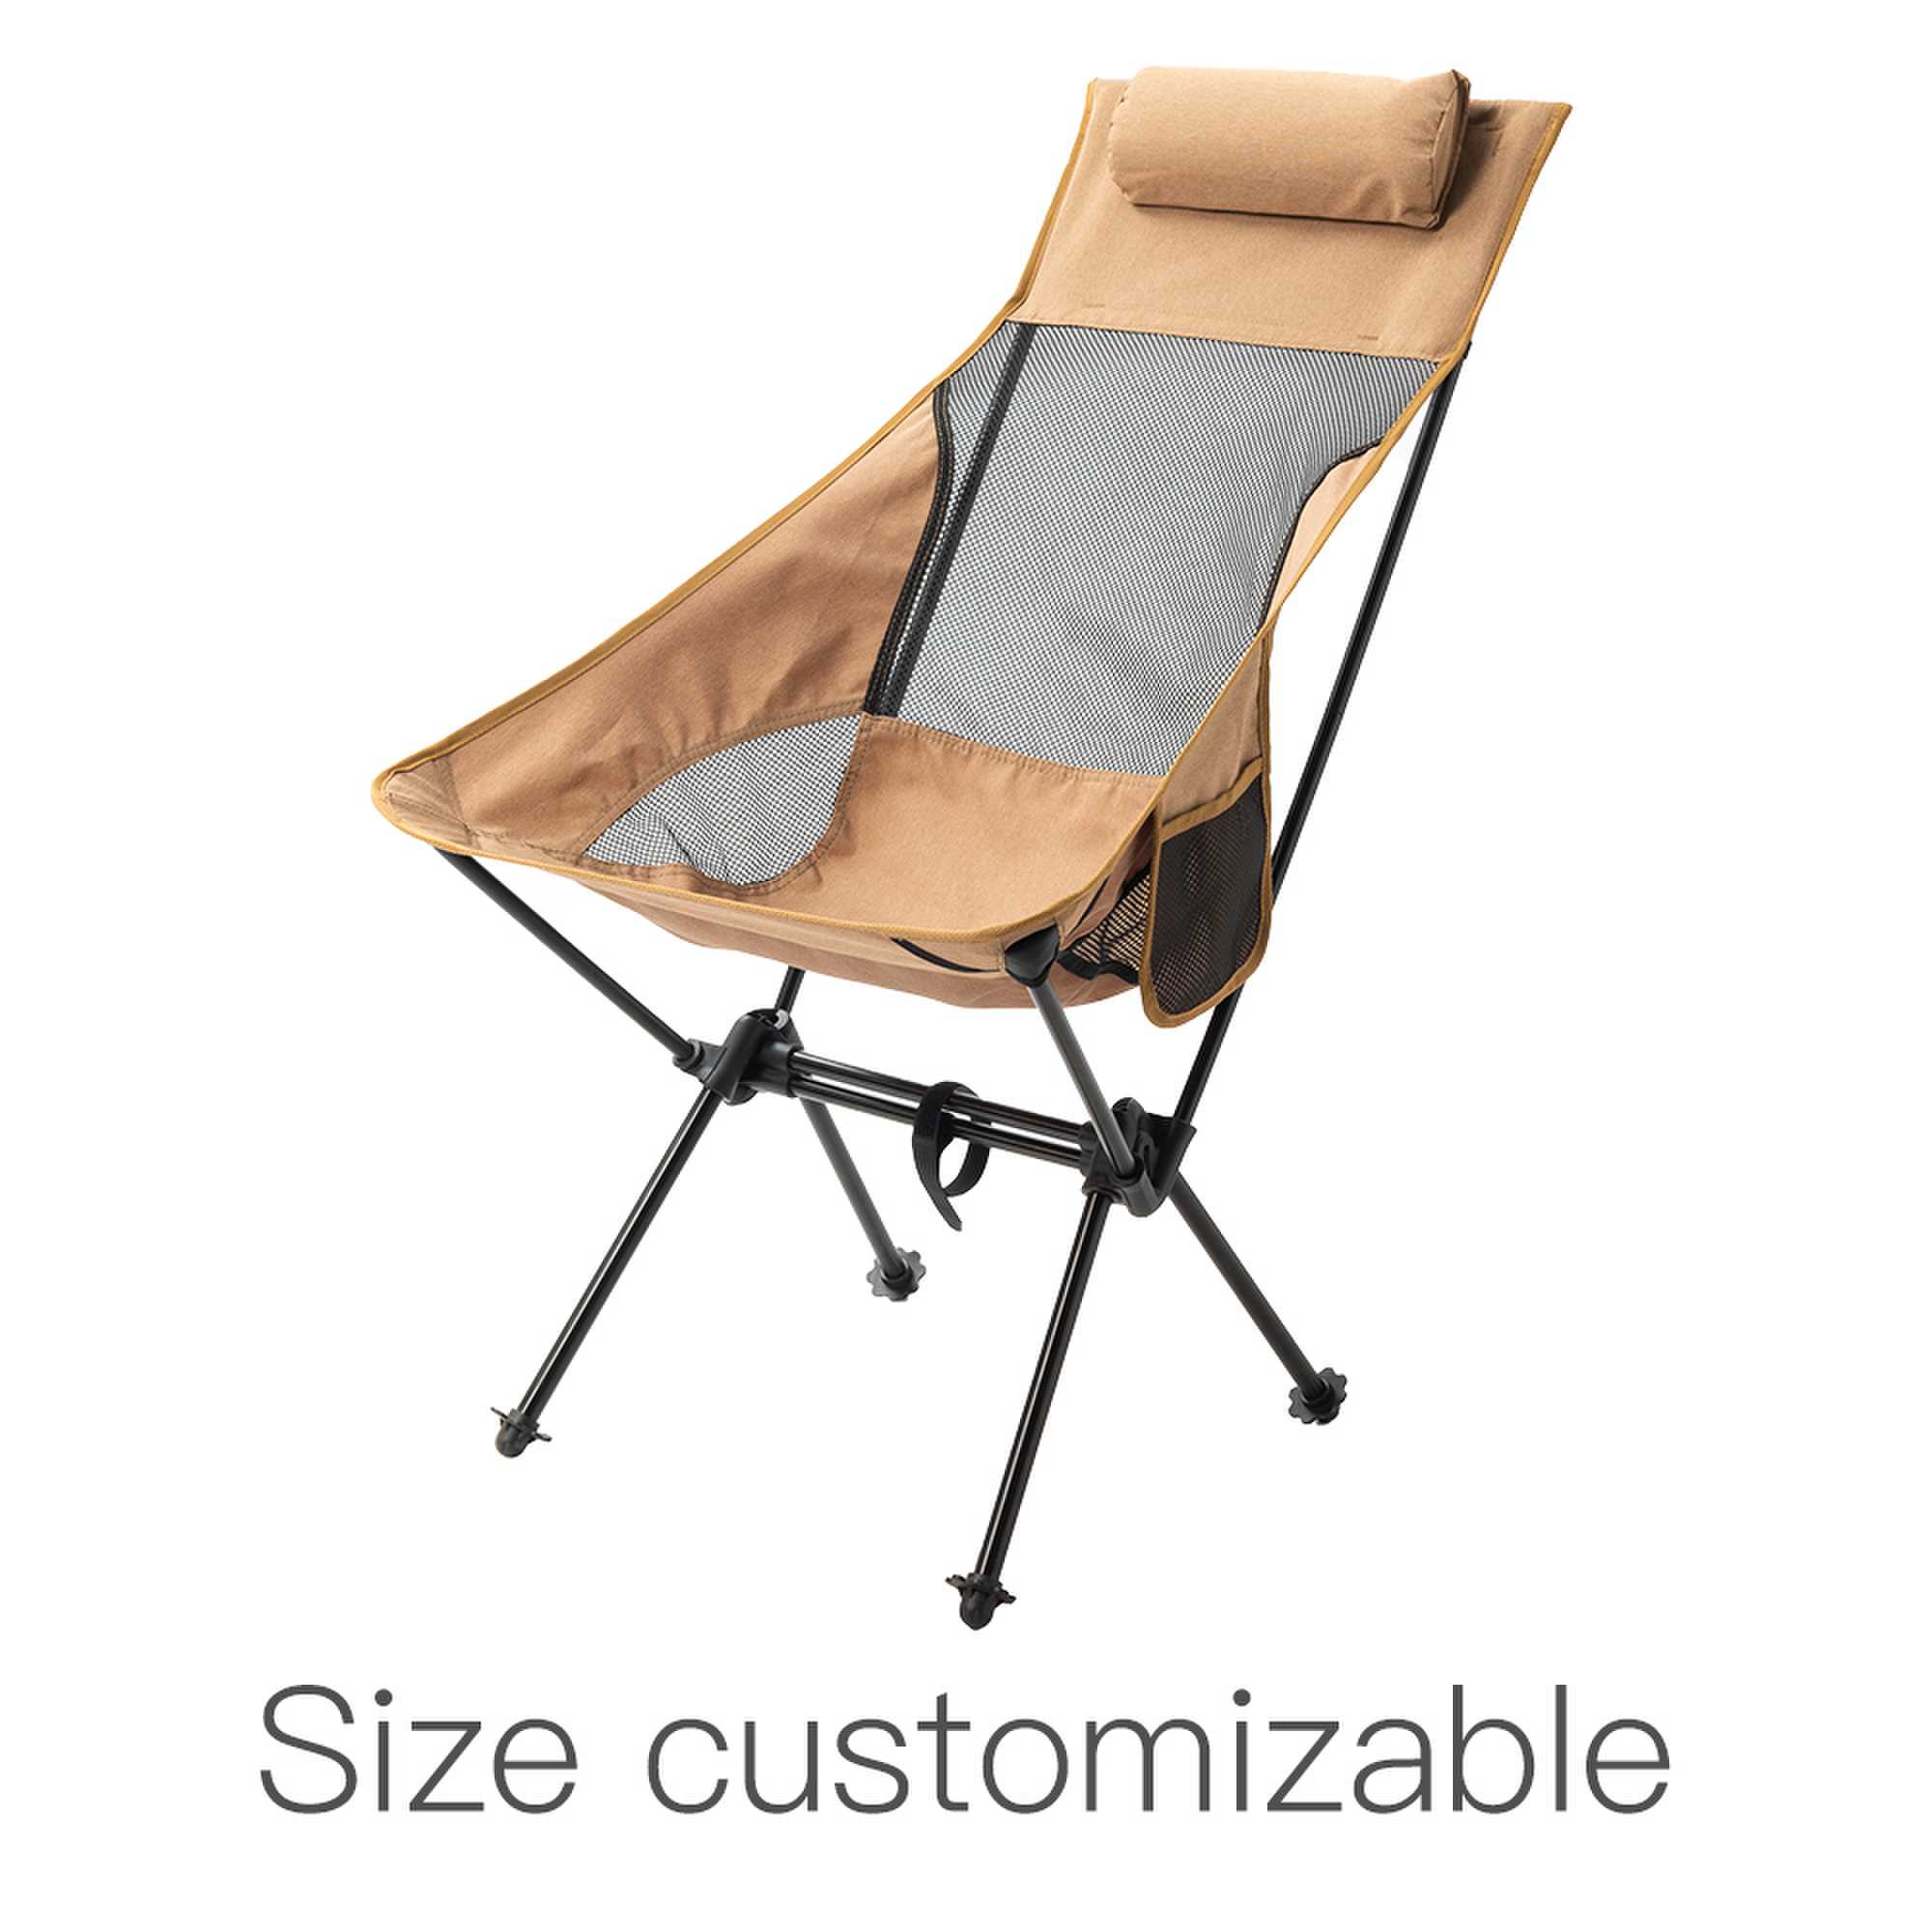 Outdoor Portable Folding Chair